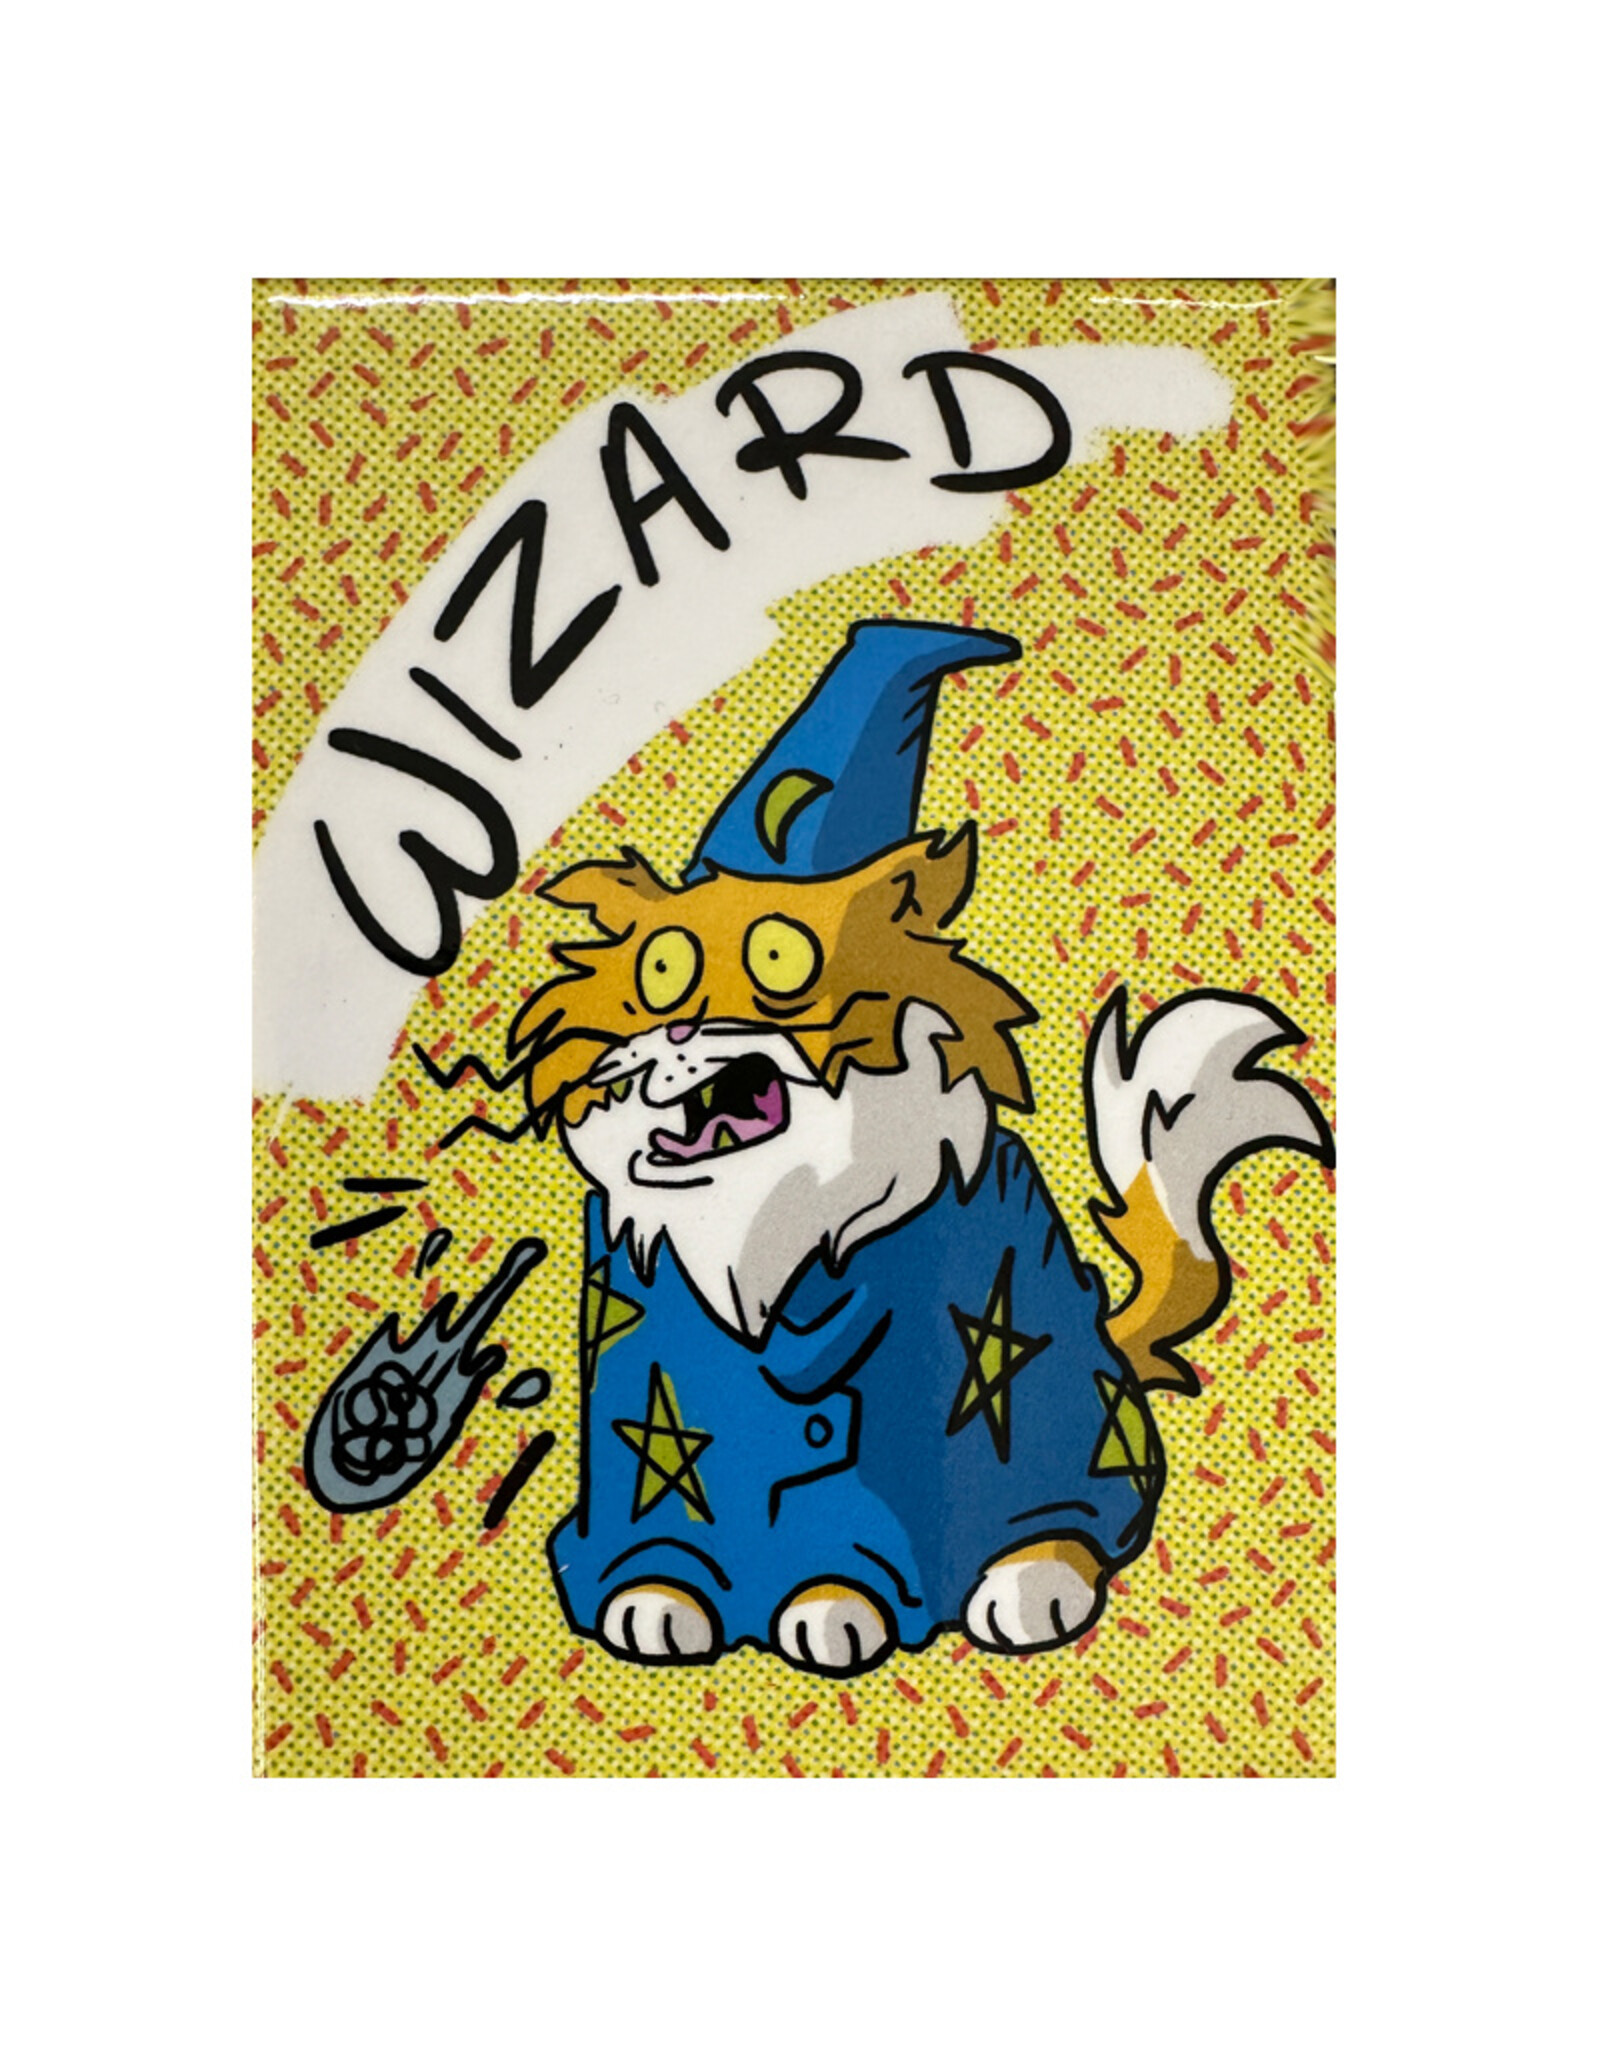 Ata-Boy Cat Wizard Magnet